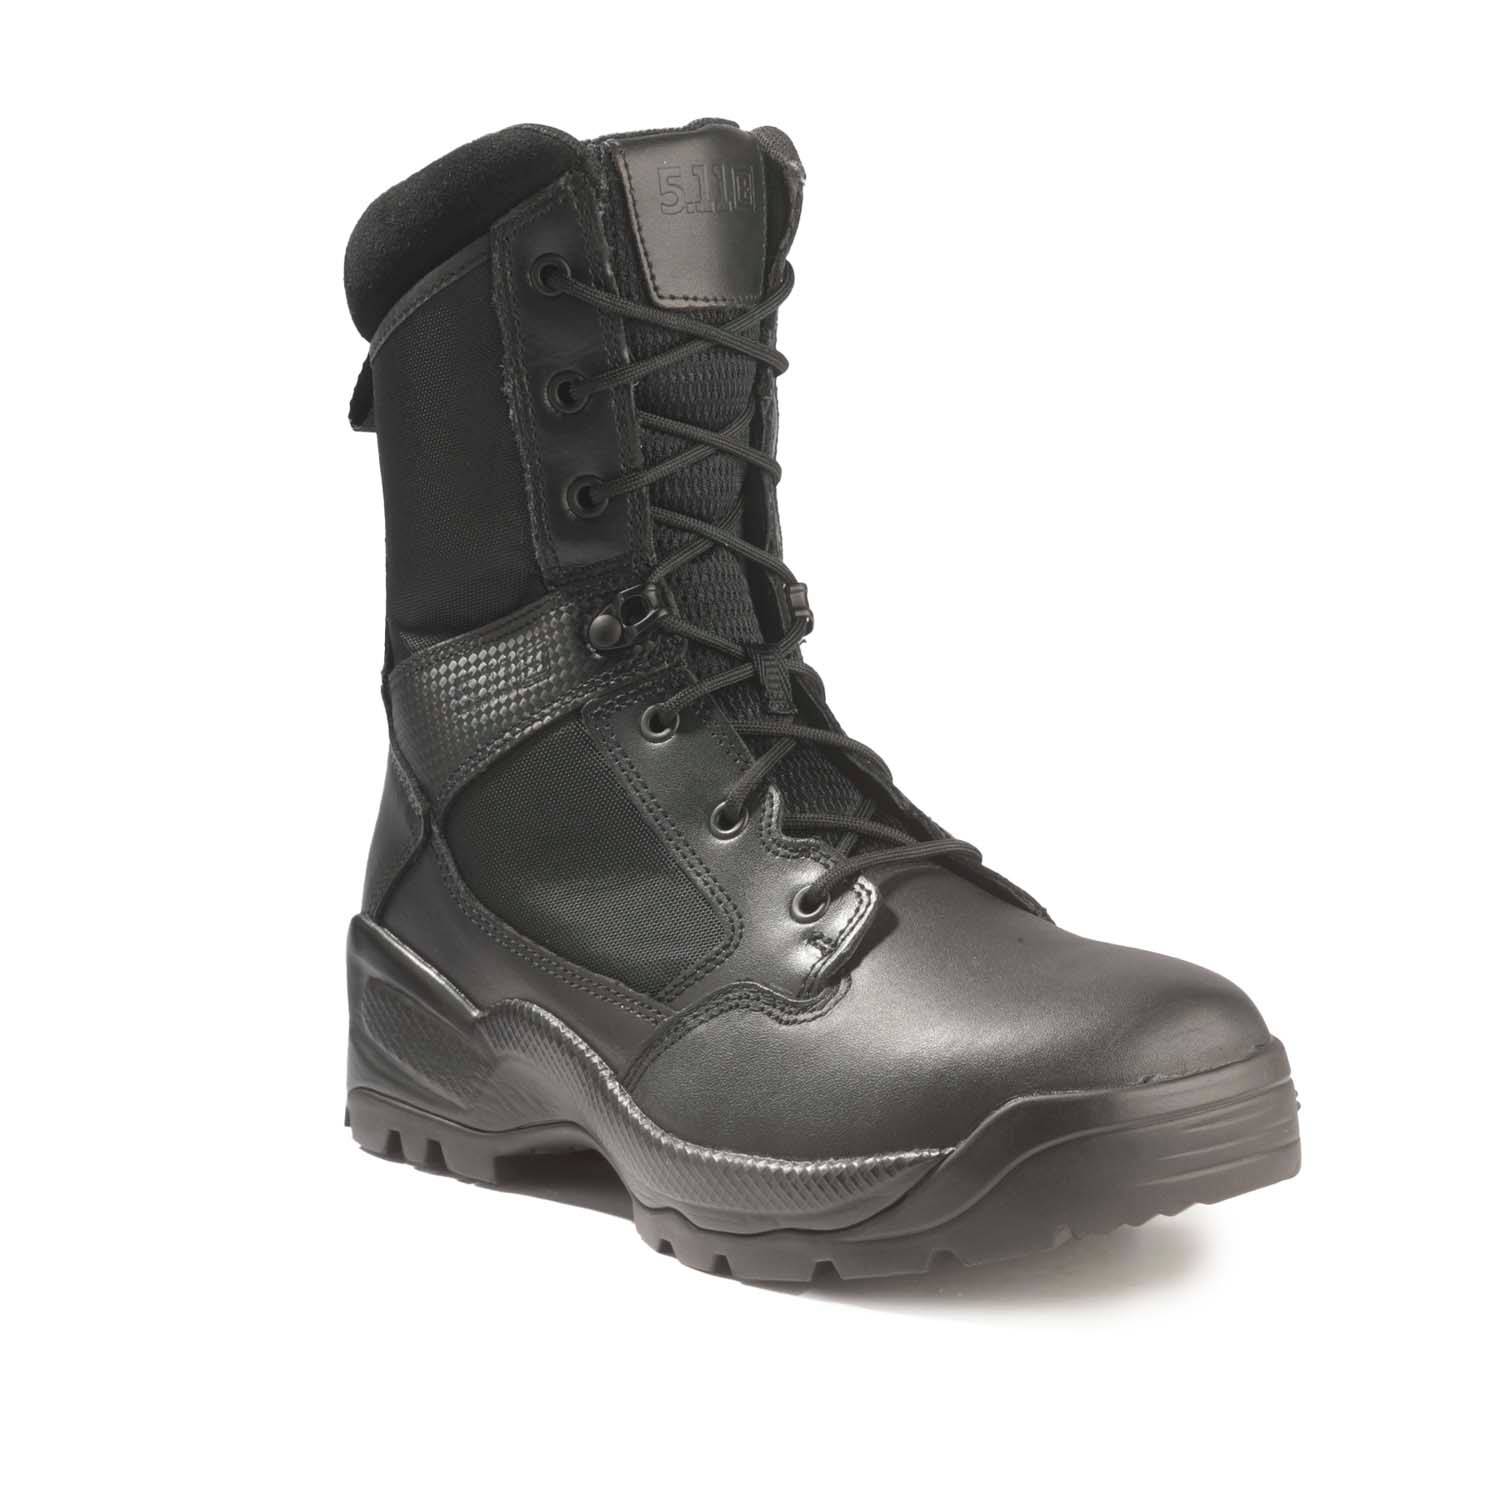 Tactical Boots for Men & Women